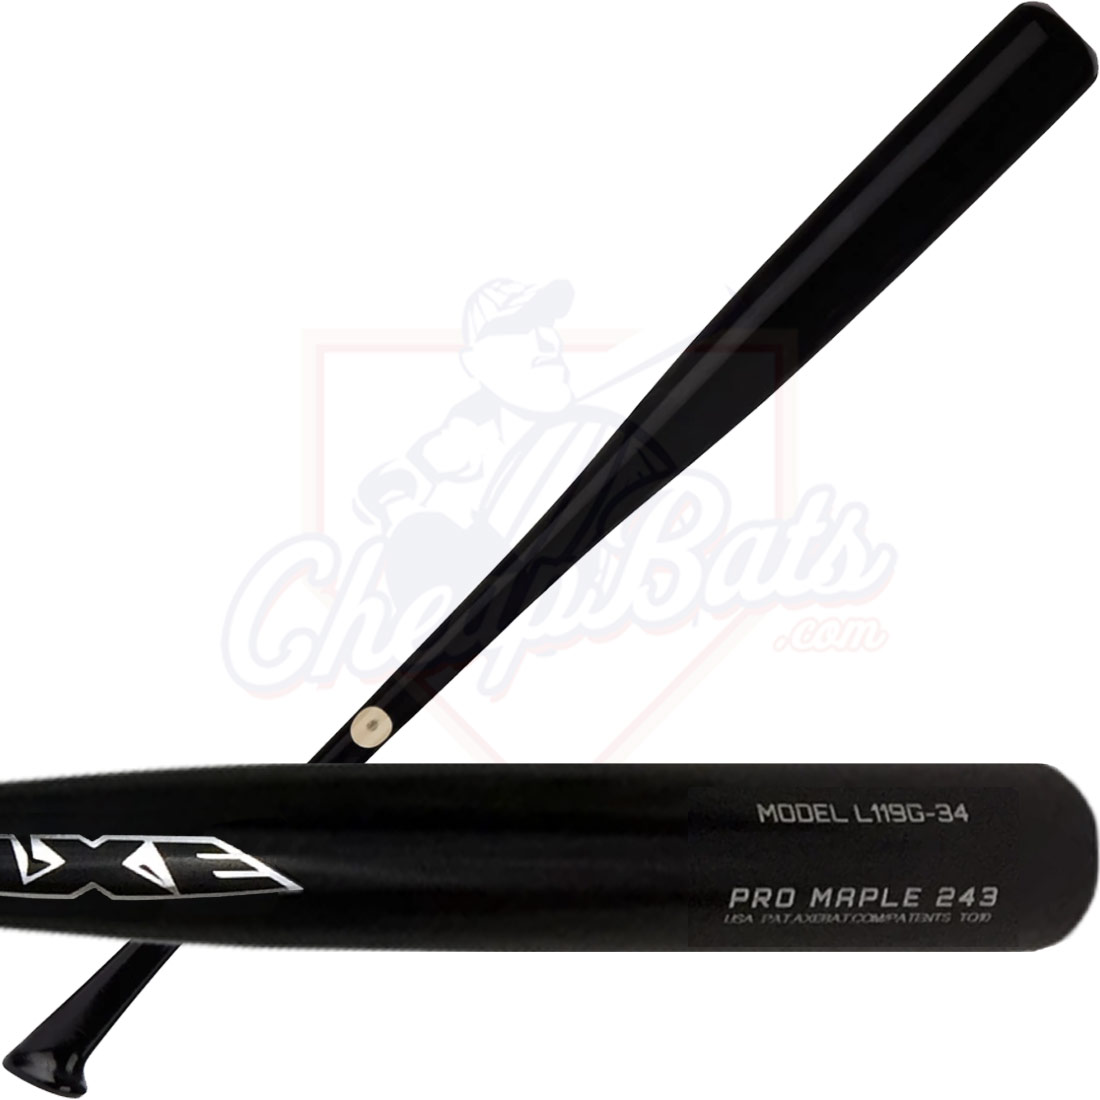 Axe Pro 243 Hard Maple Wood Baseball Bat L119G